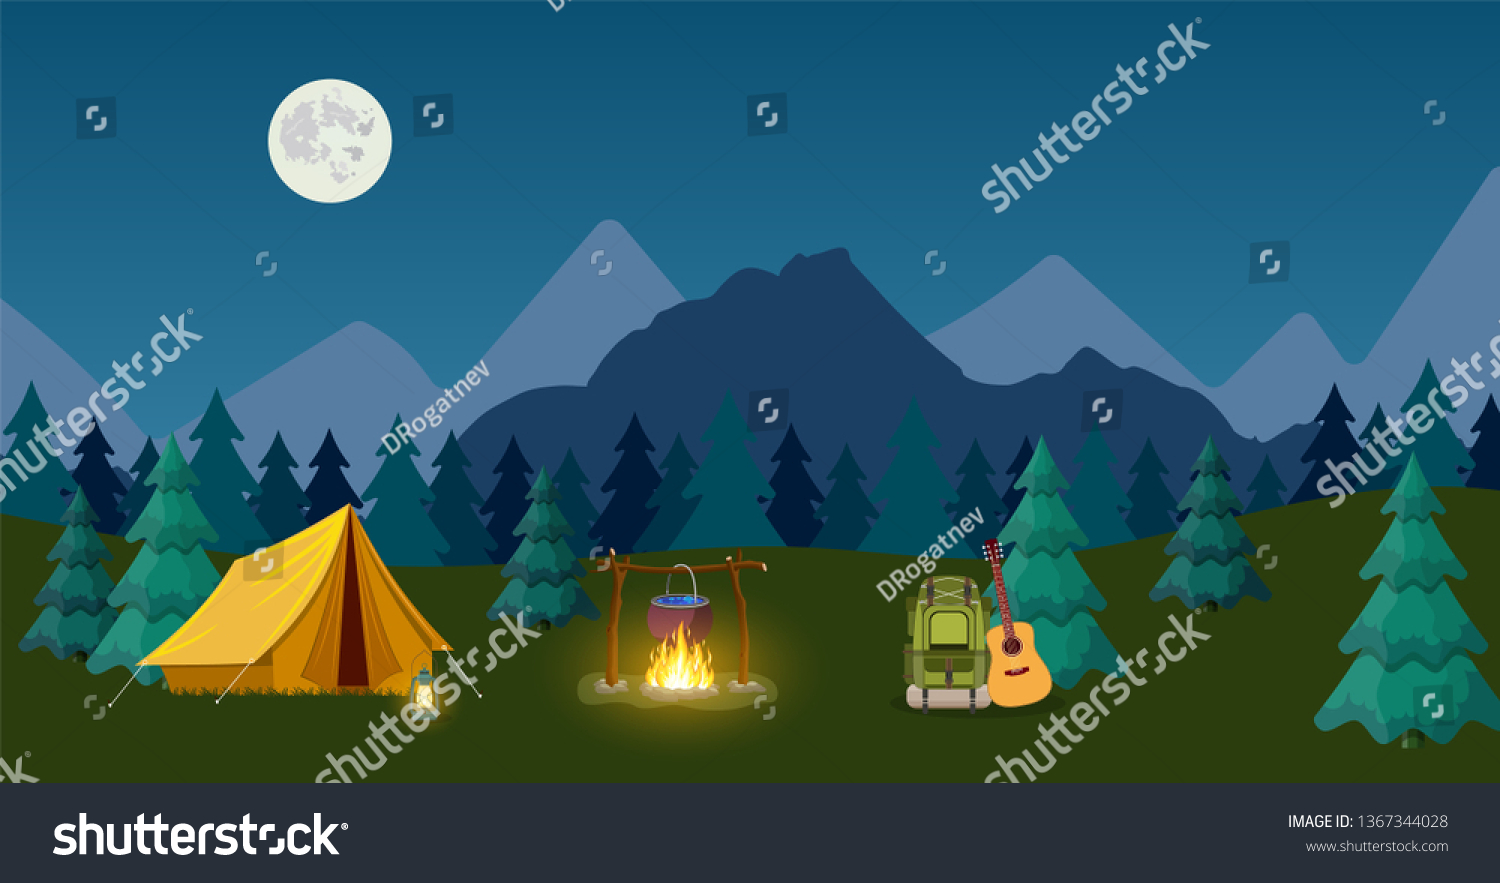 Koppeling ik betwijfel het Spijsverteringsorgaan Camping Mountain Camp Web Banners Promotional Stock Illustration 1367344028